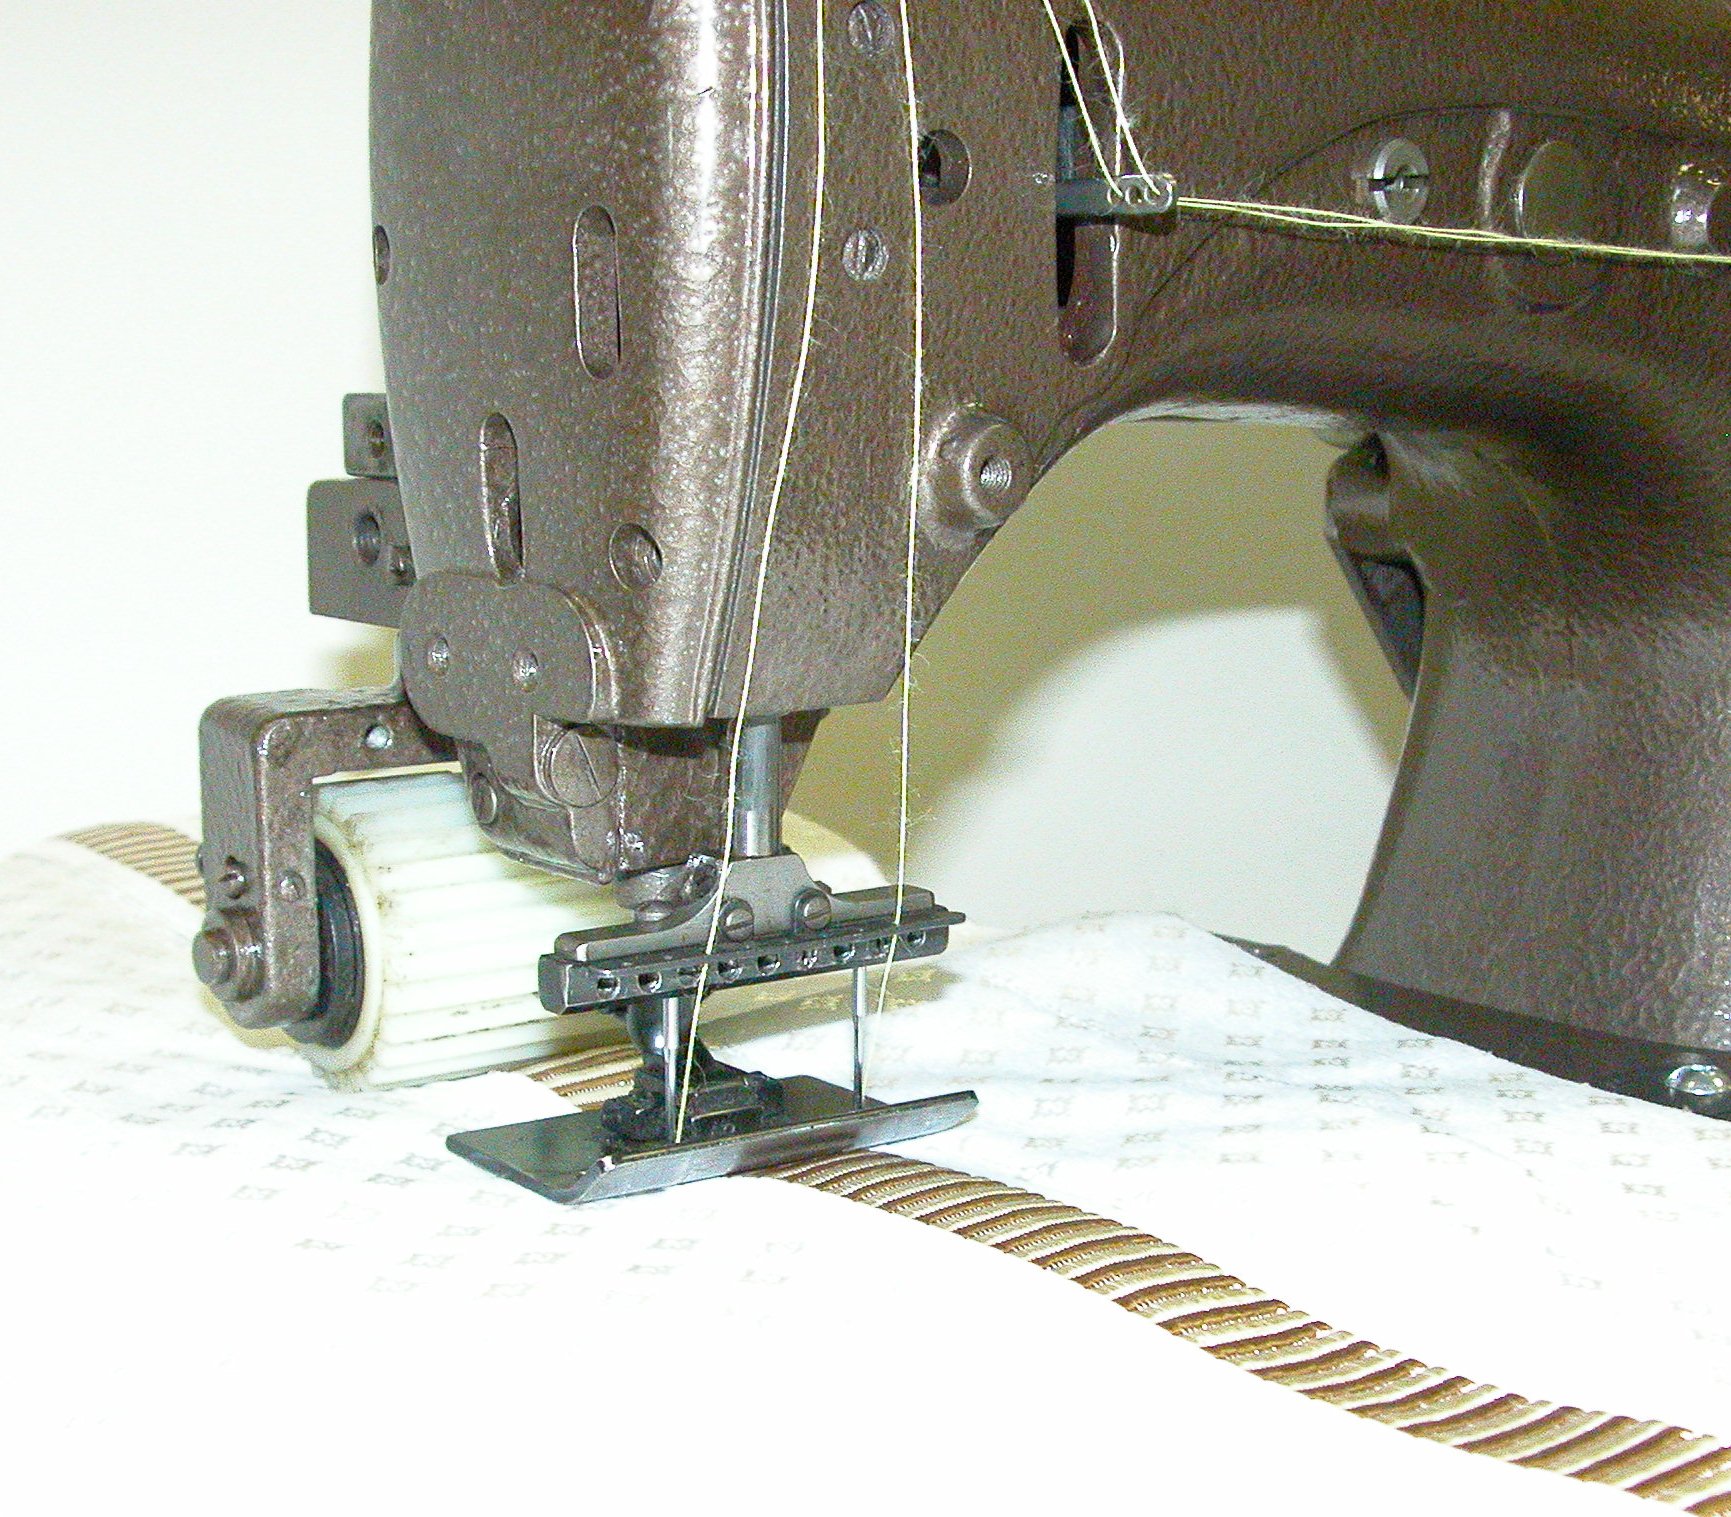 SK 54400BW Decorative Border Sewing Machine